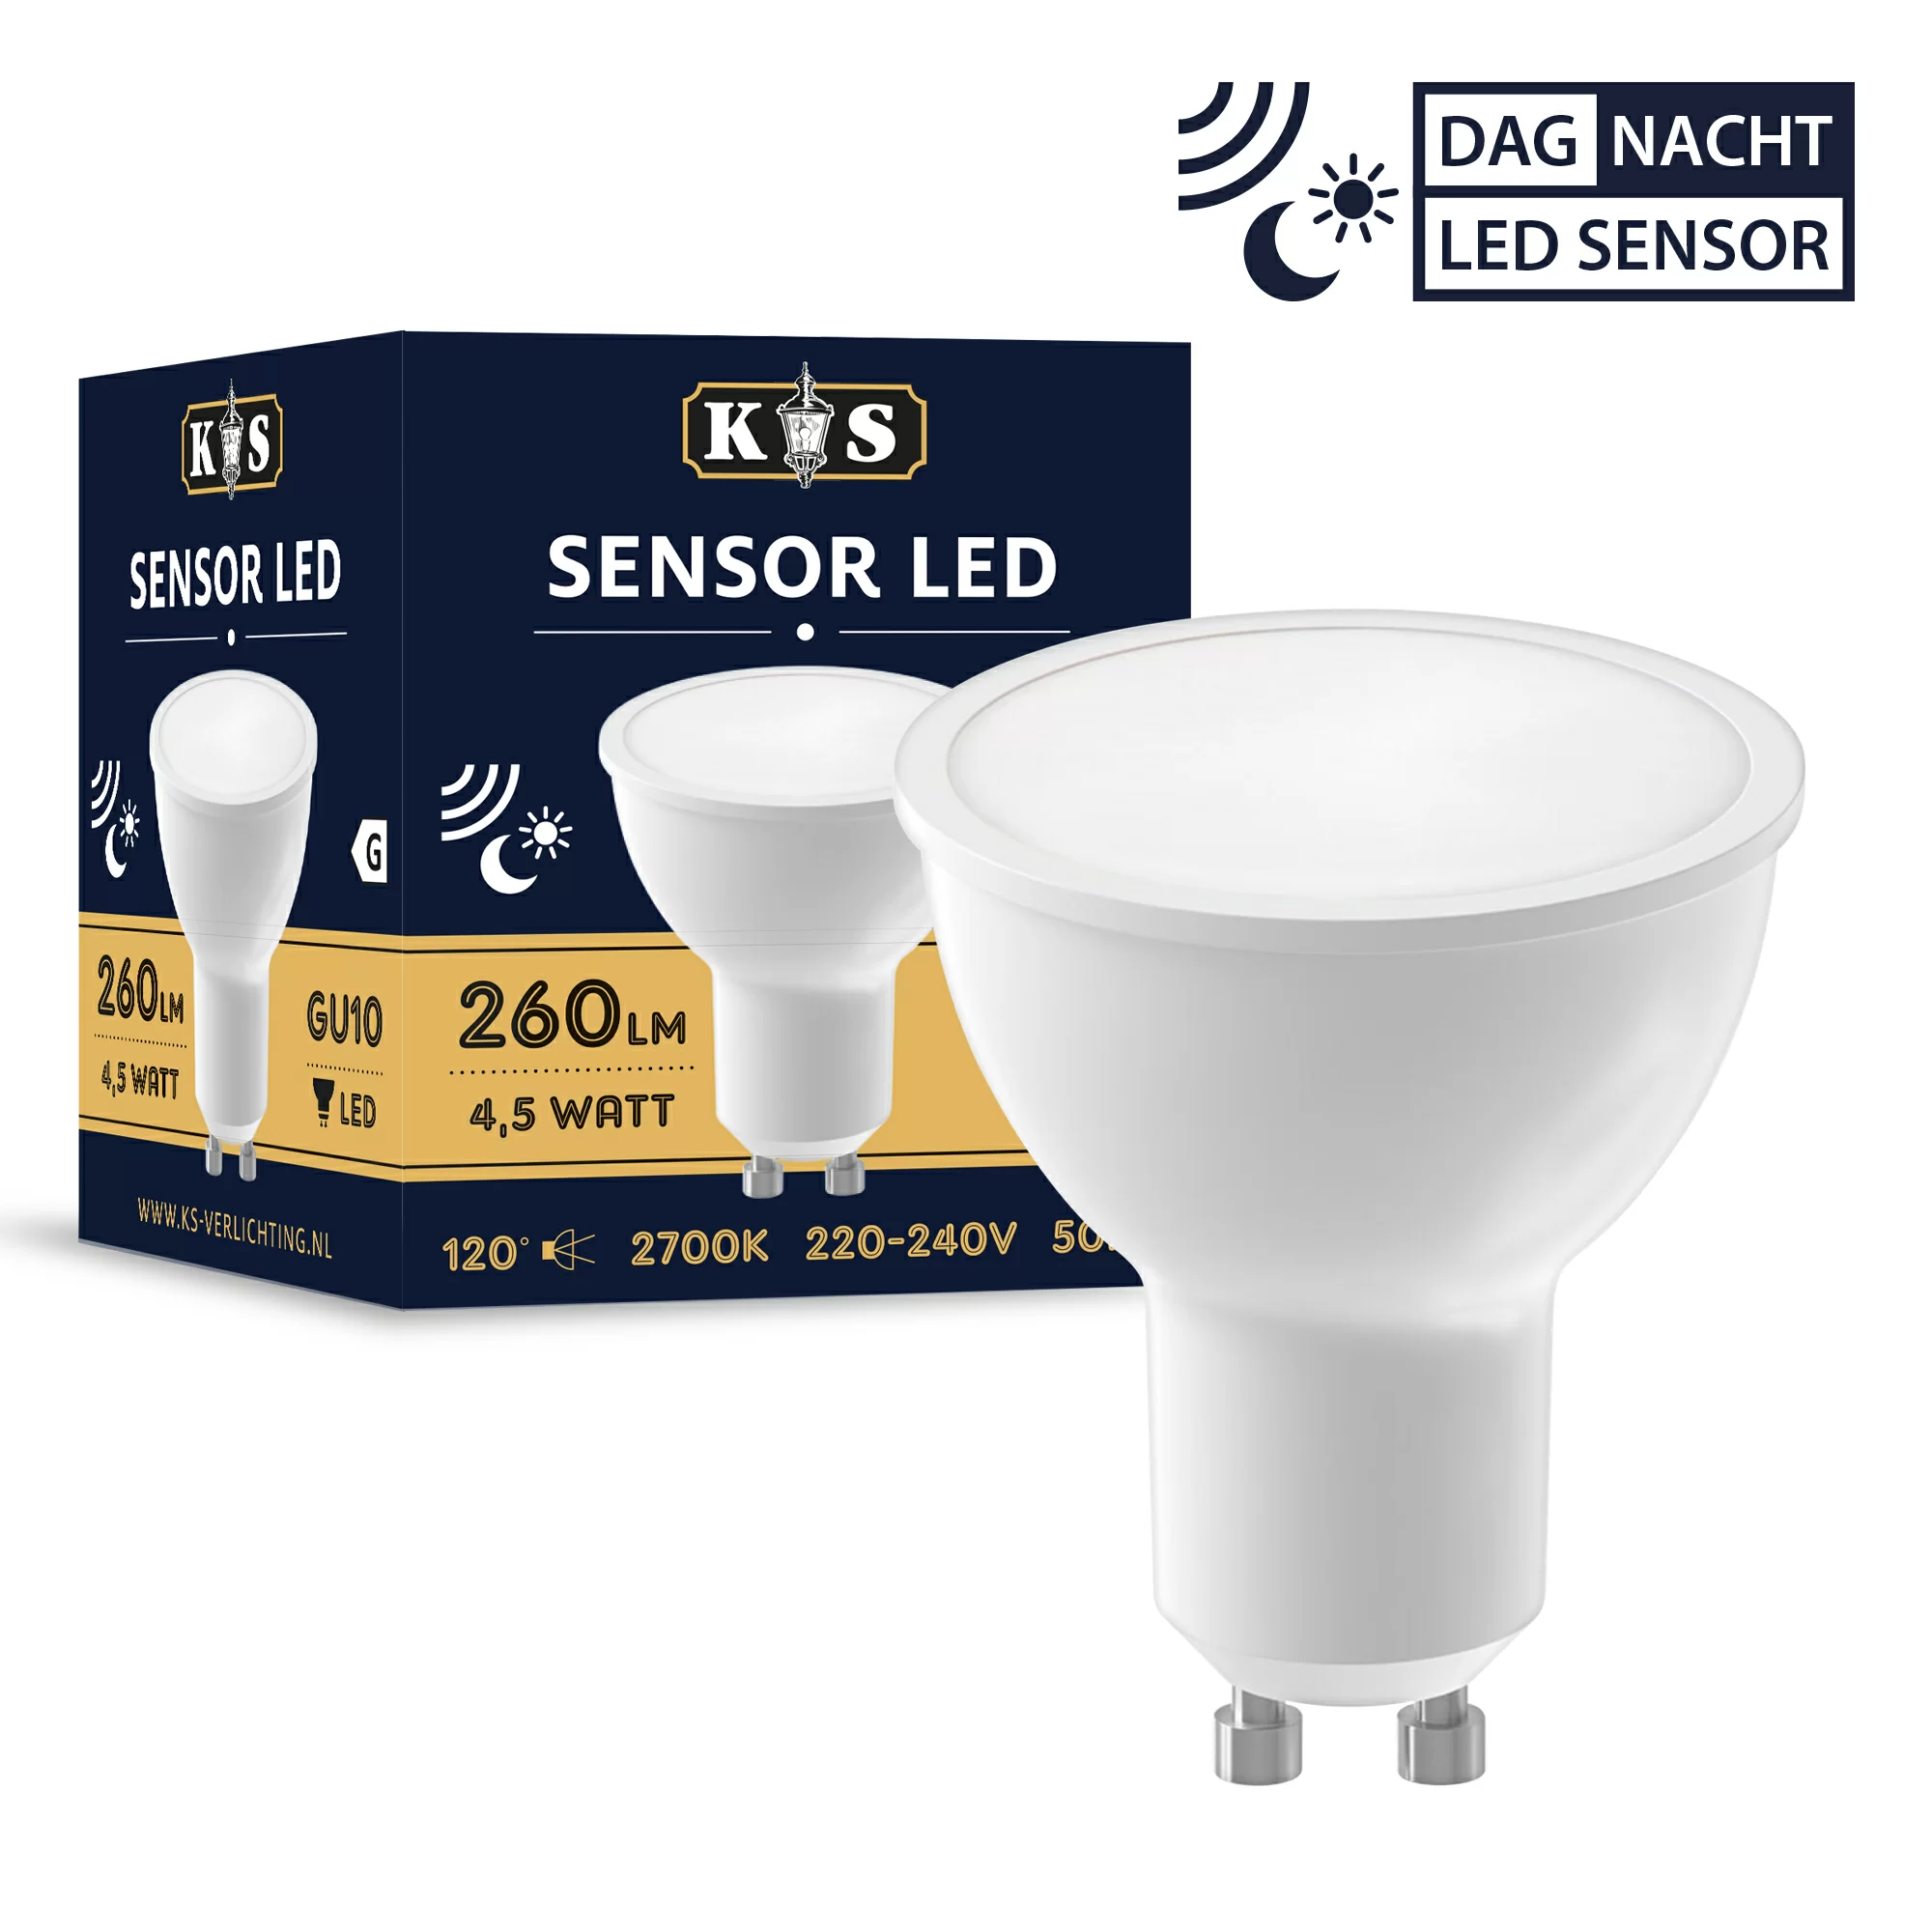 Belang plein Onderstrepen GU10 LED met sensor D/N 4,5 watt | Nostalux.nl